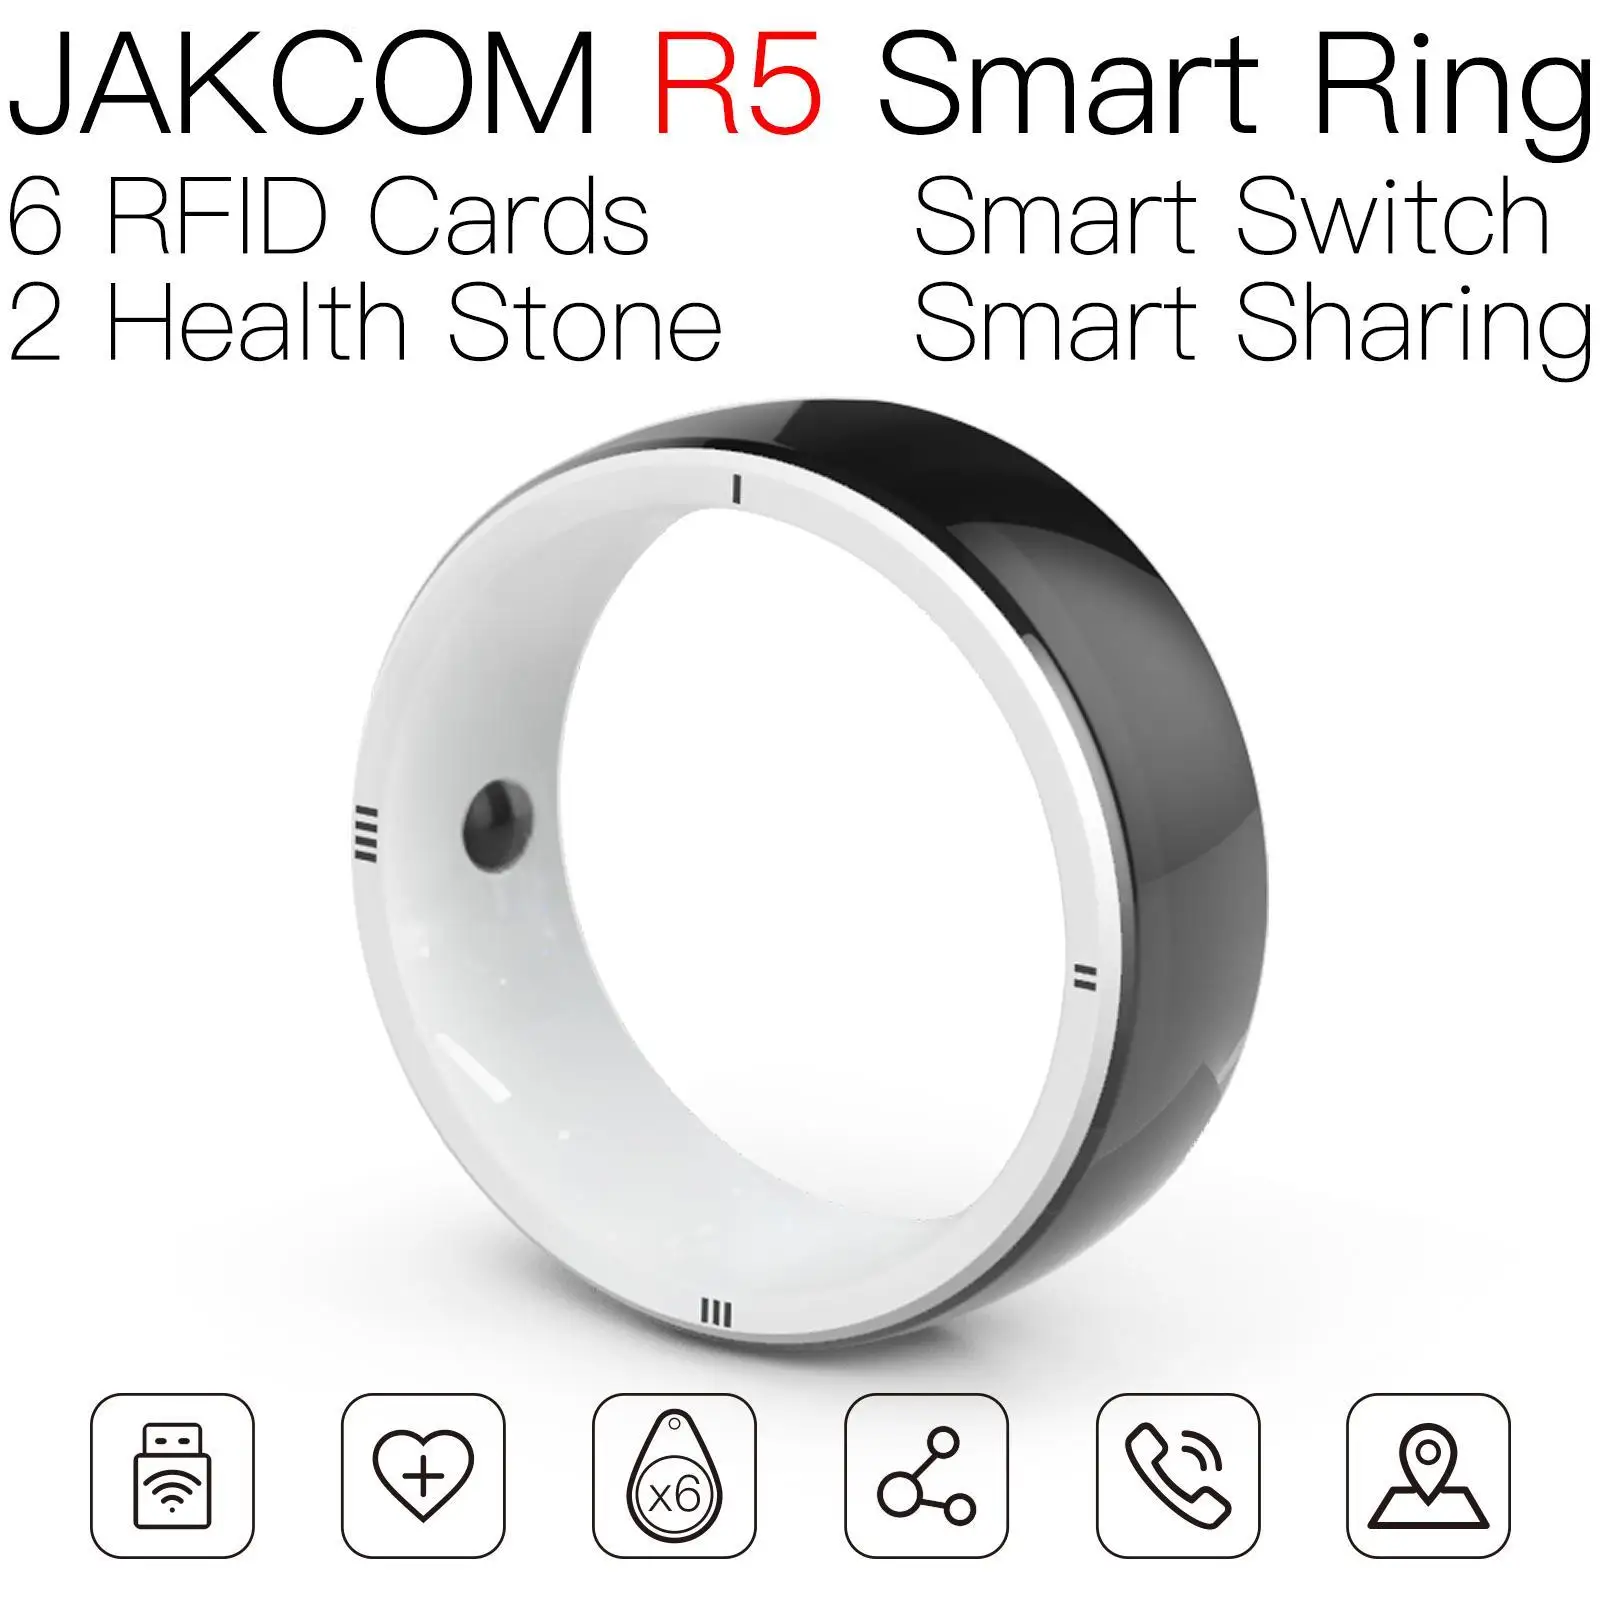 

JAKCOM R5 Smart Ring better than emblem nfc 30mm carte serie 1 new horizon rfid writable chip uid lm1036n f526 reader